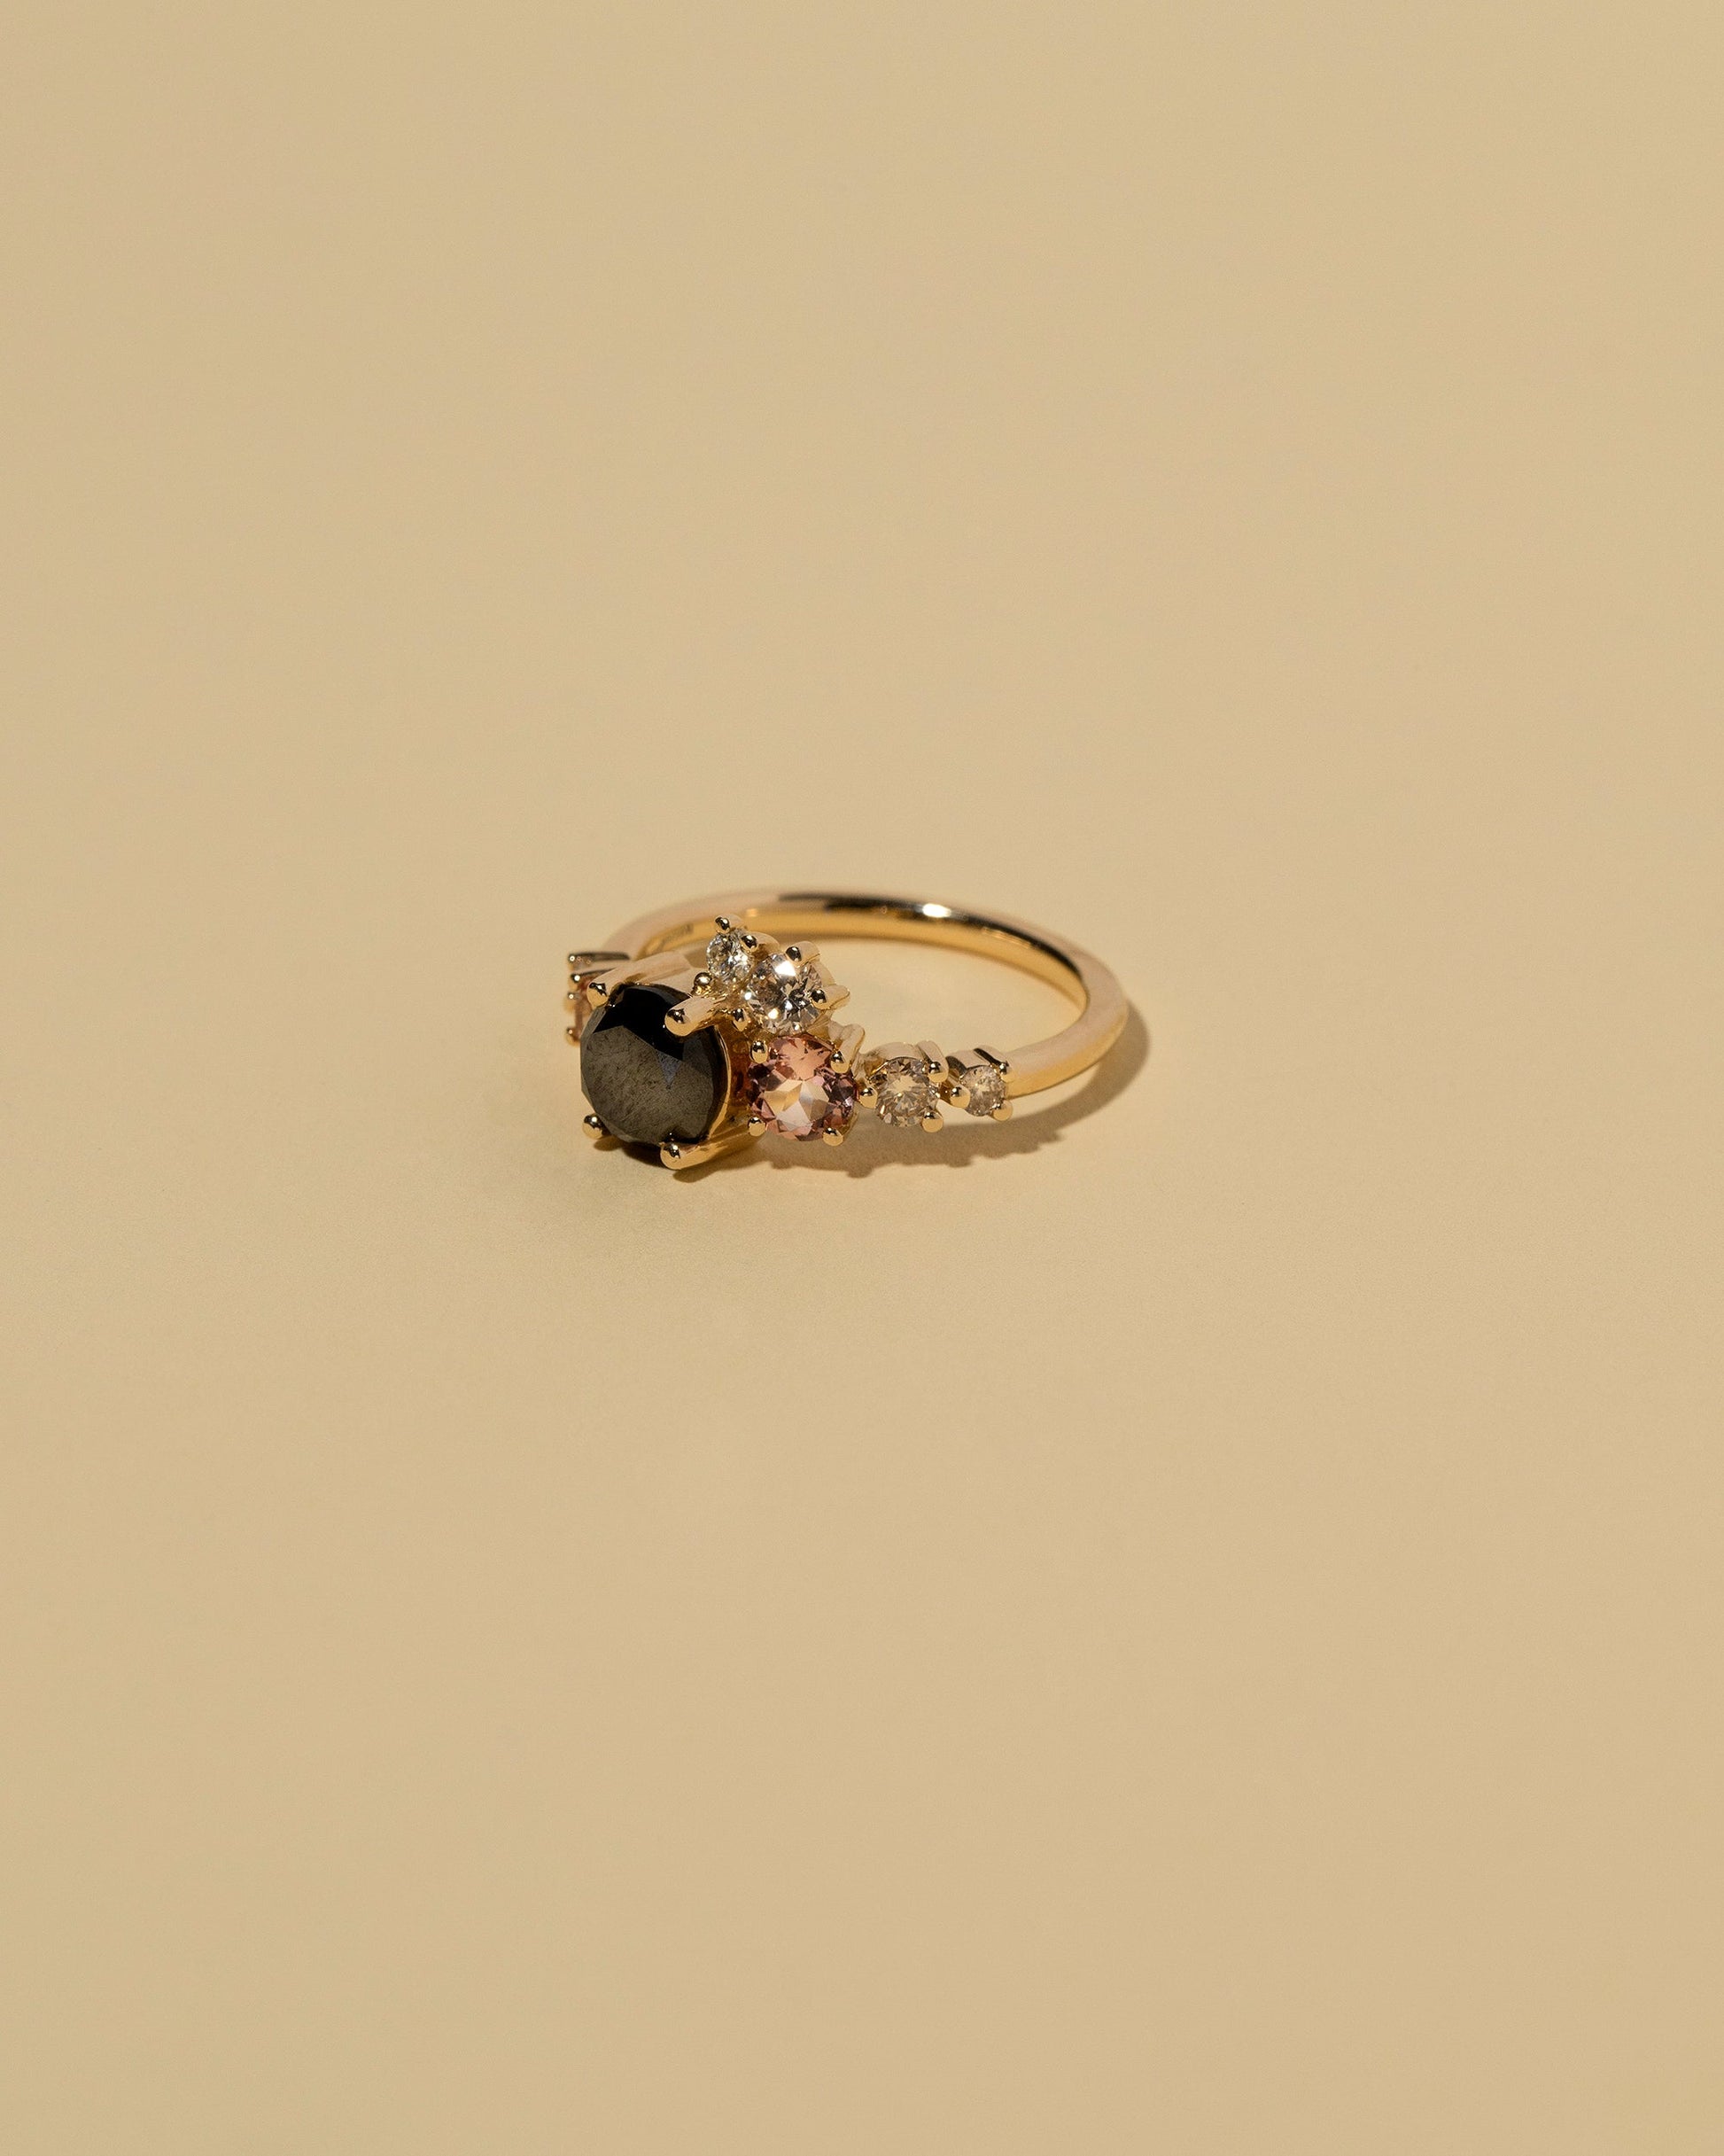  Luna Ring - Black Diamond on light color background.